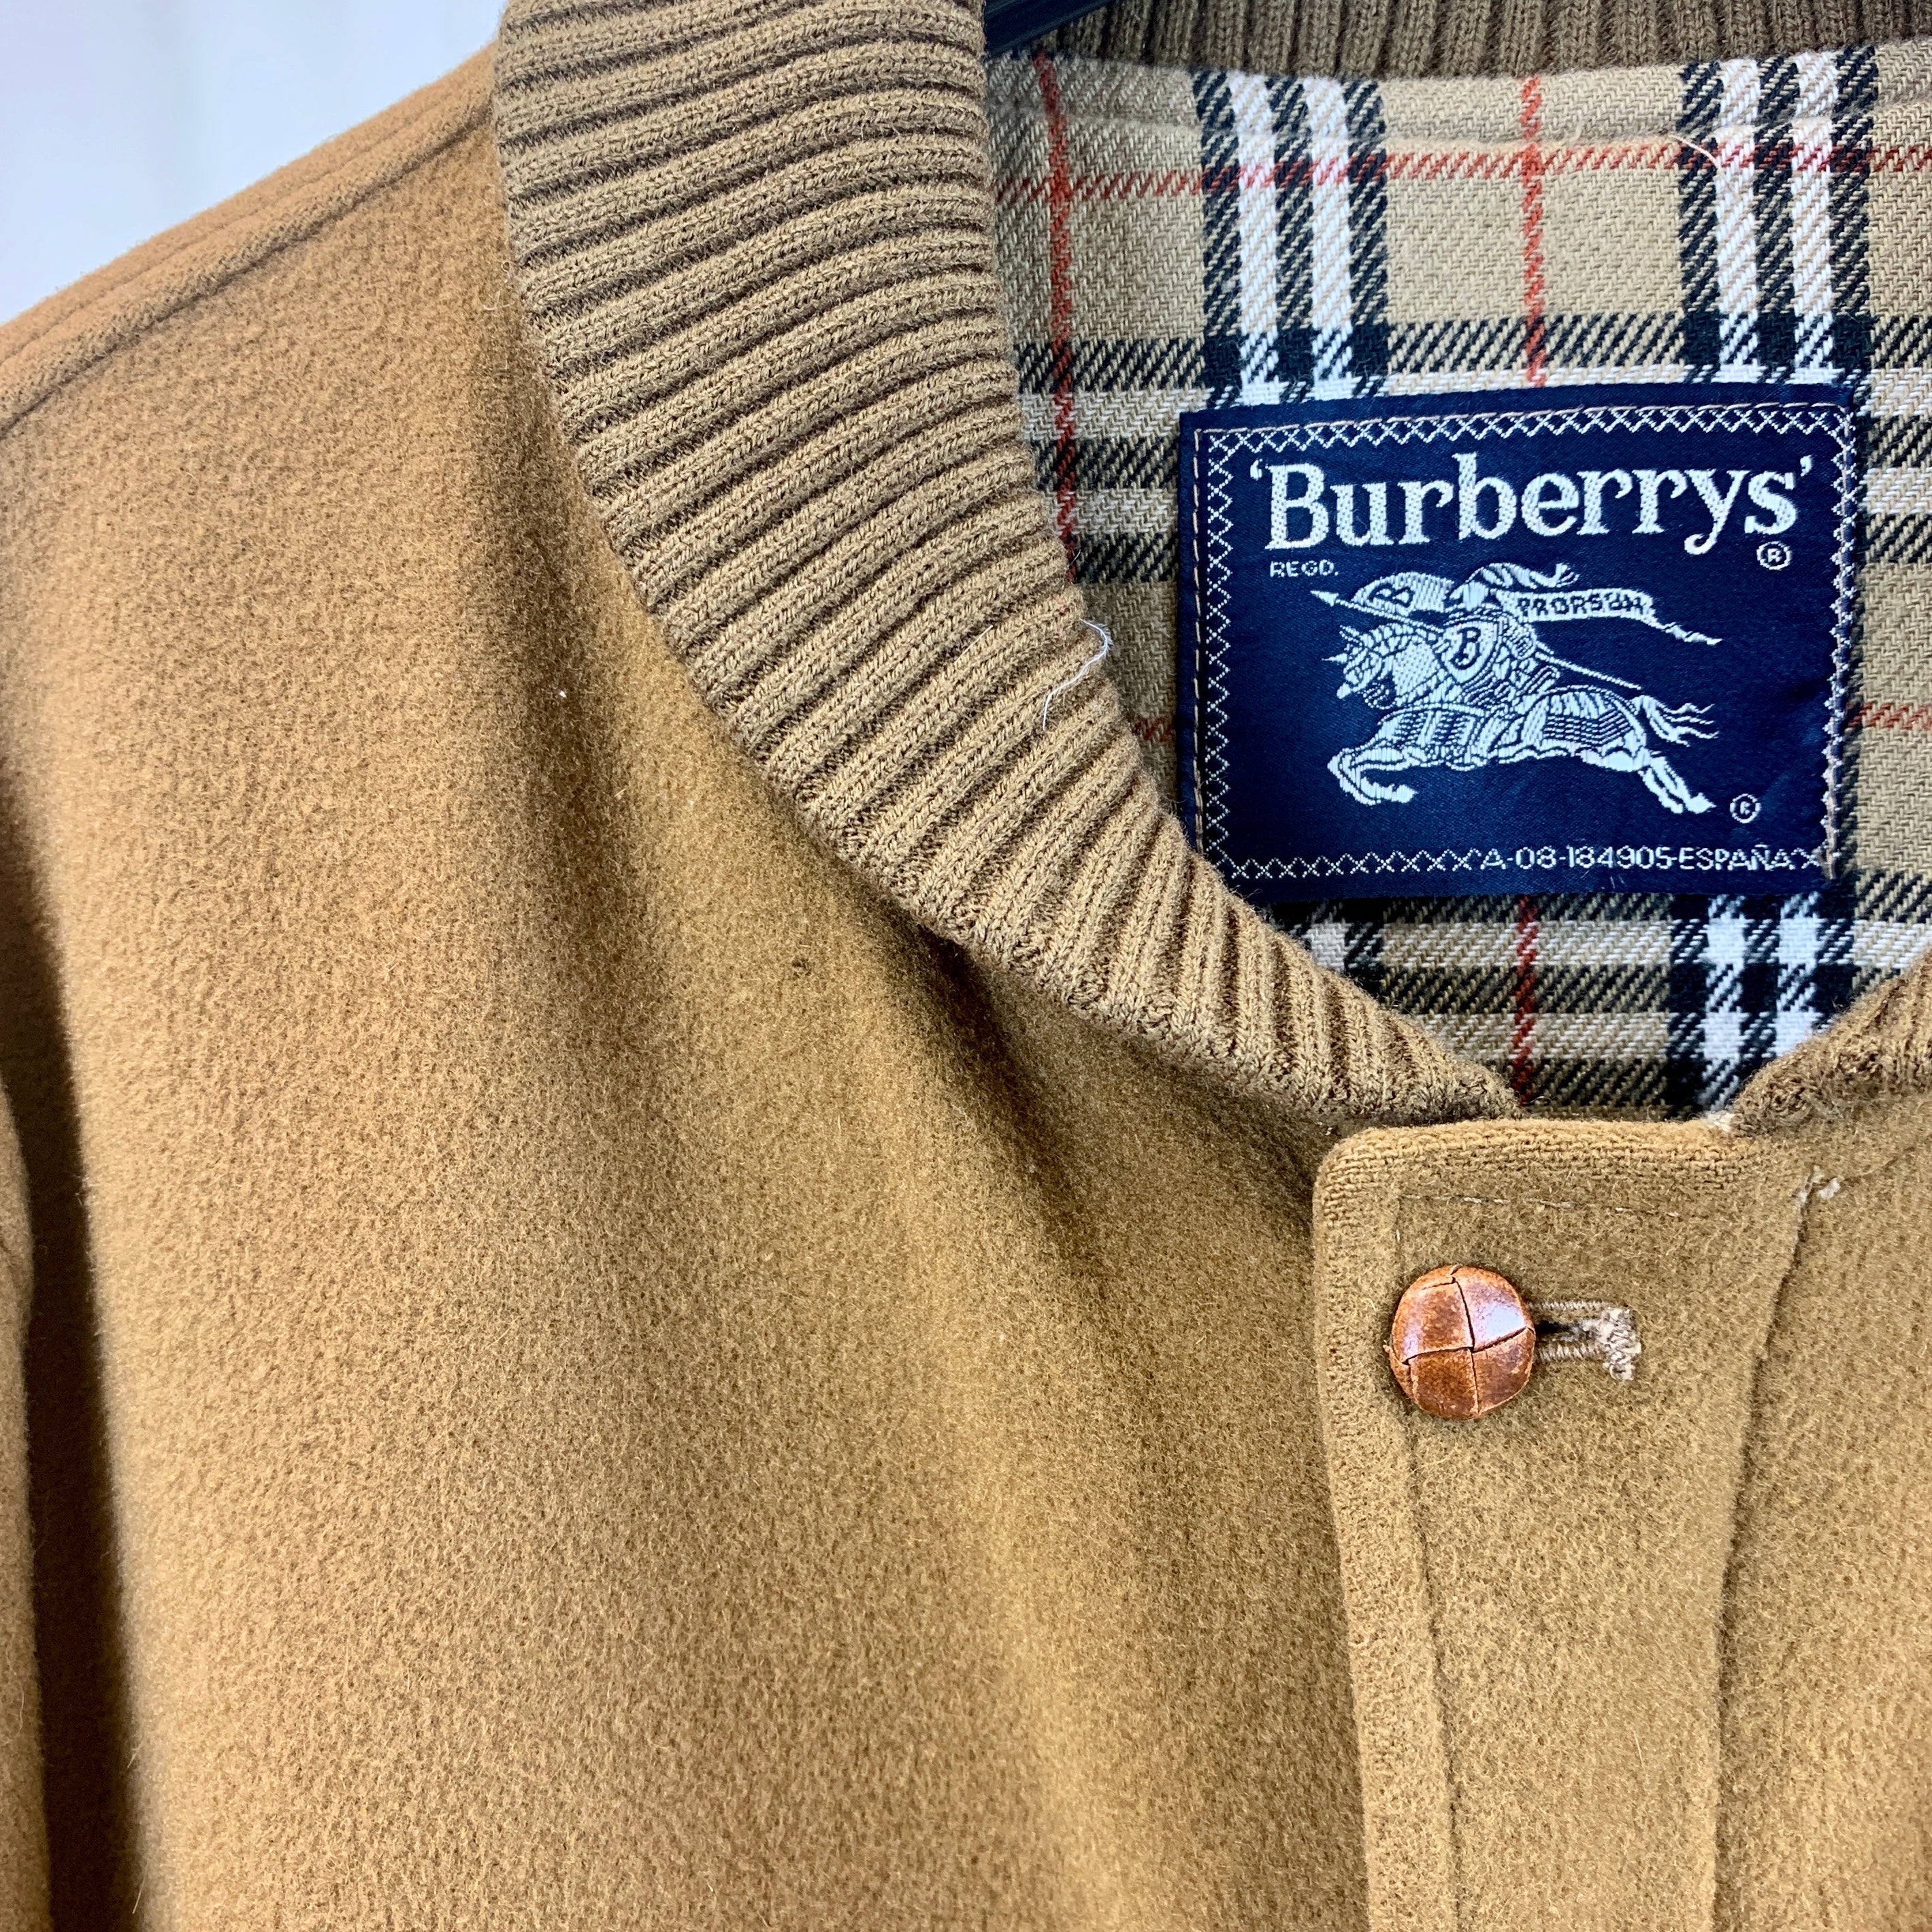 Burberry Brown Wool Coat/Jacket